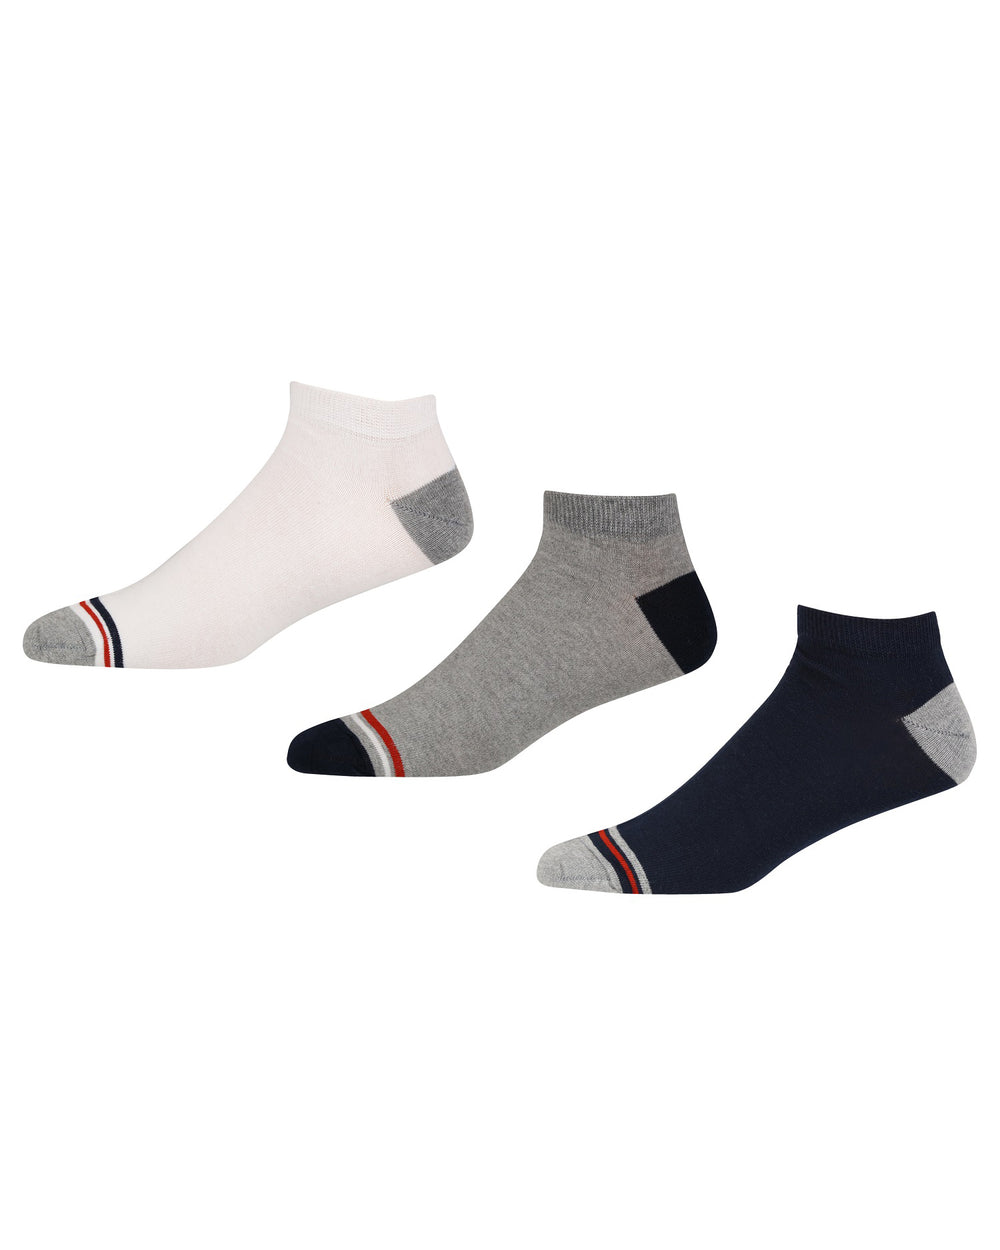 Peppers Pride Men's 3-Pack Liner Socks - White/Navy/Grey Marl